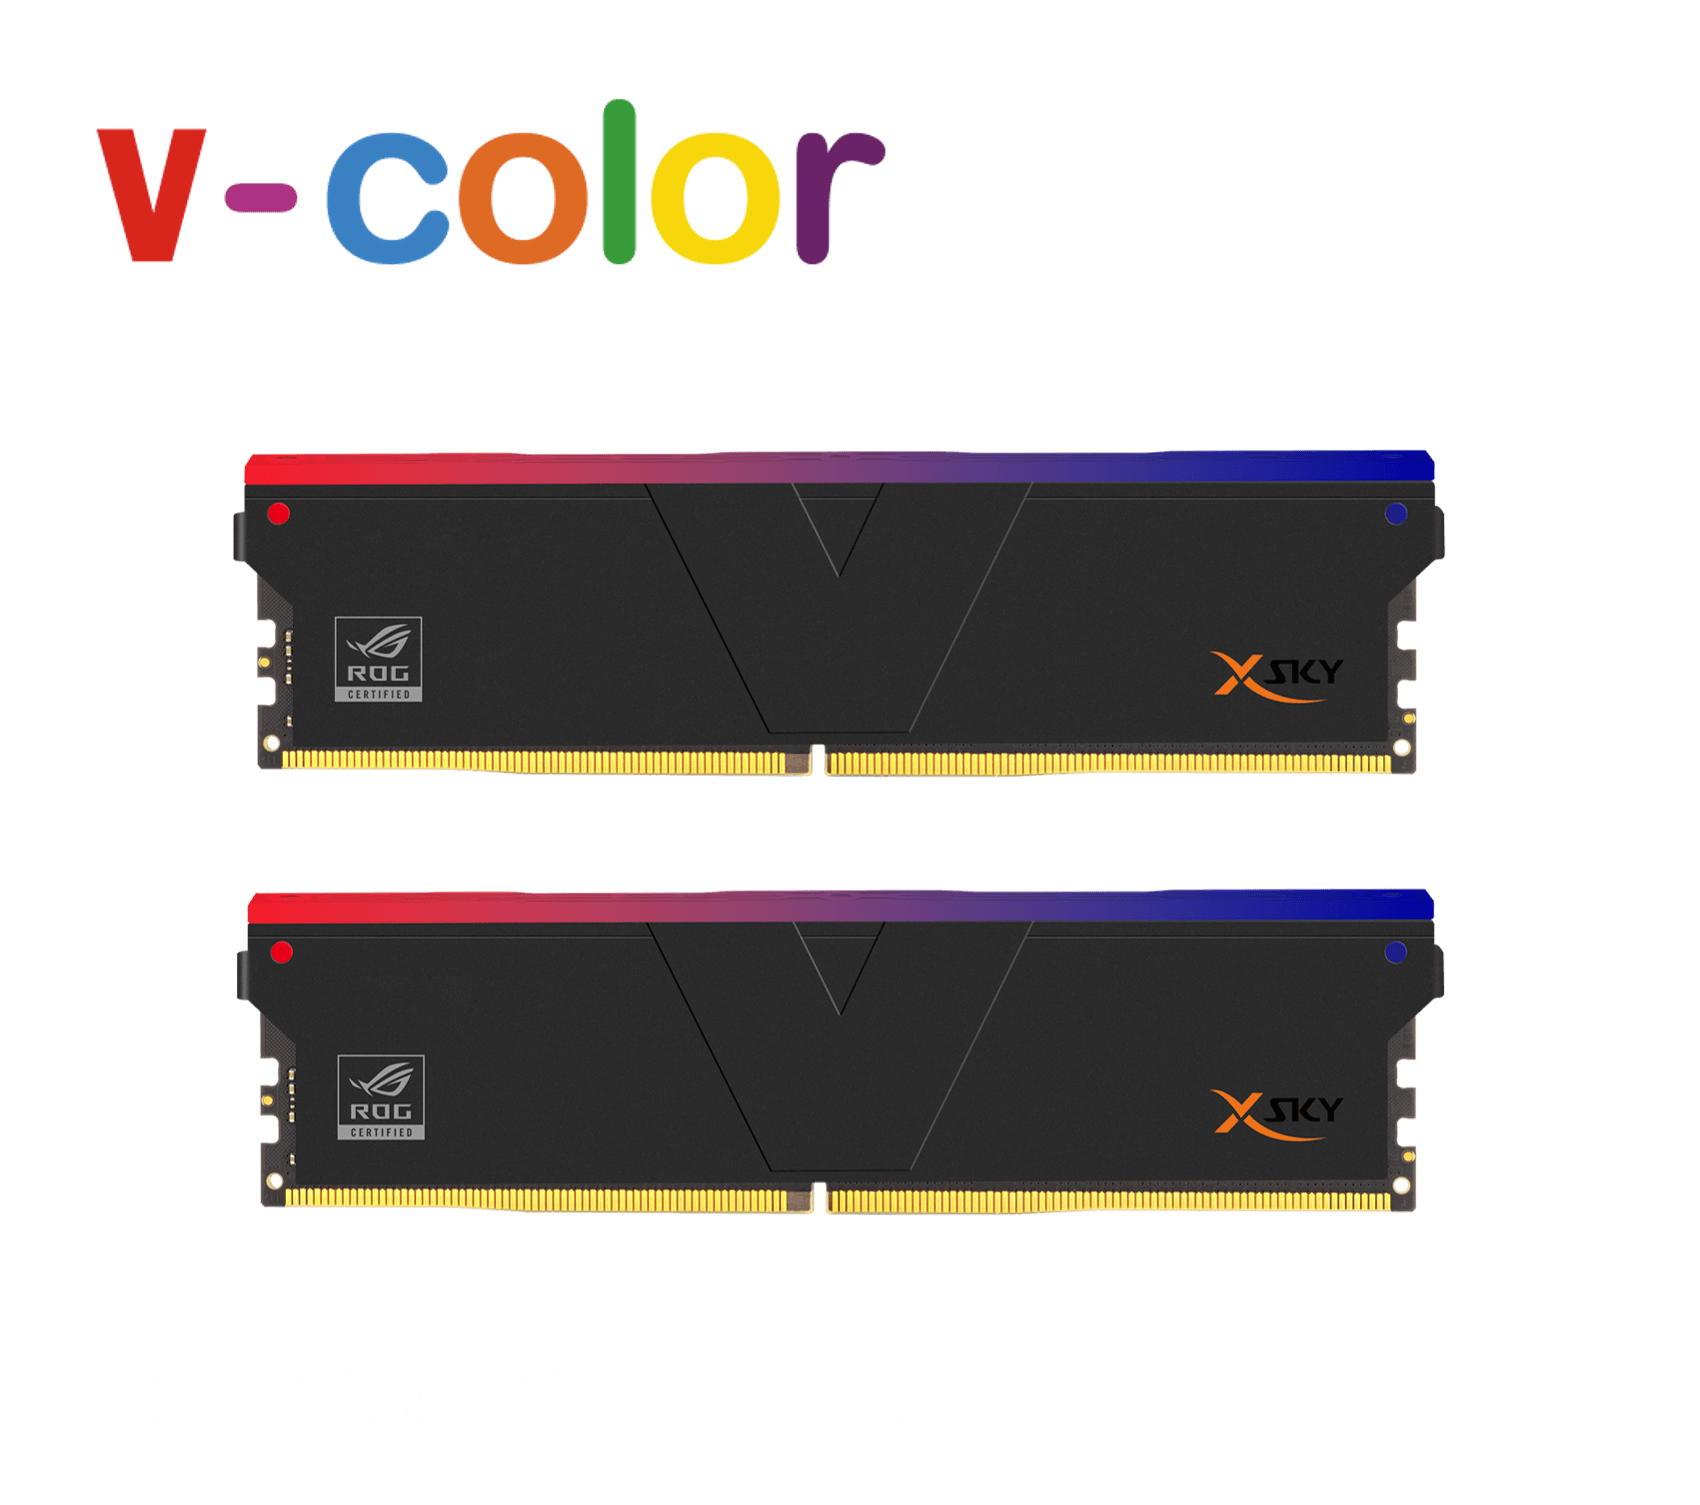 DDR5 XSky RGB ROG Certified